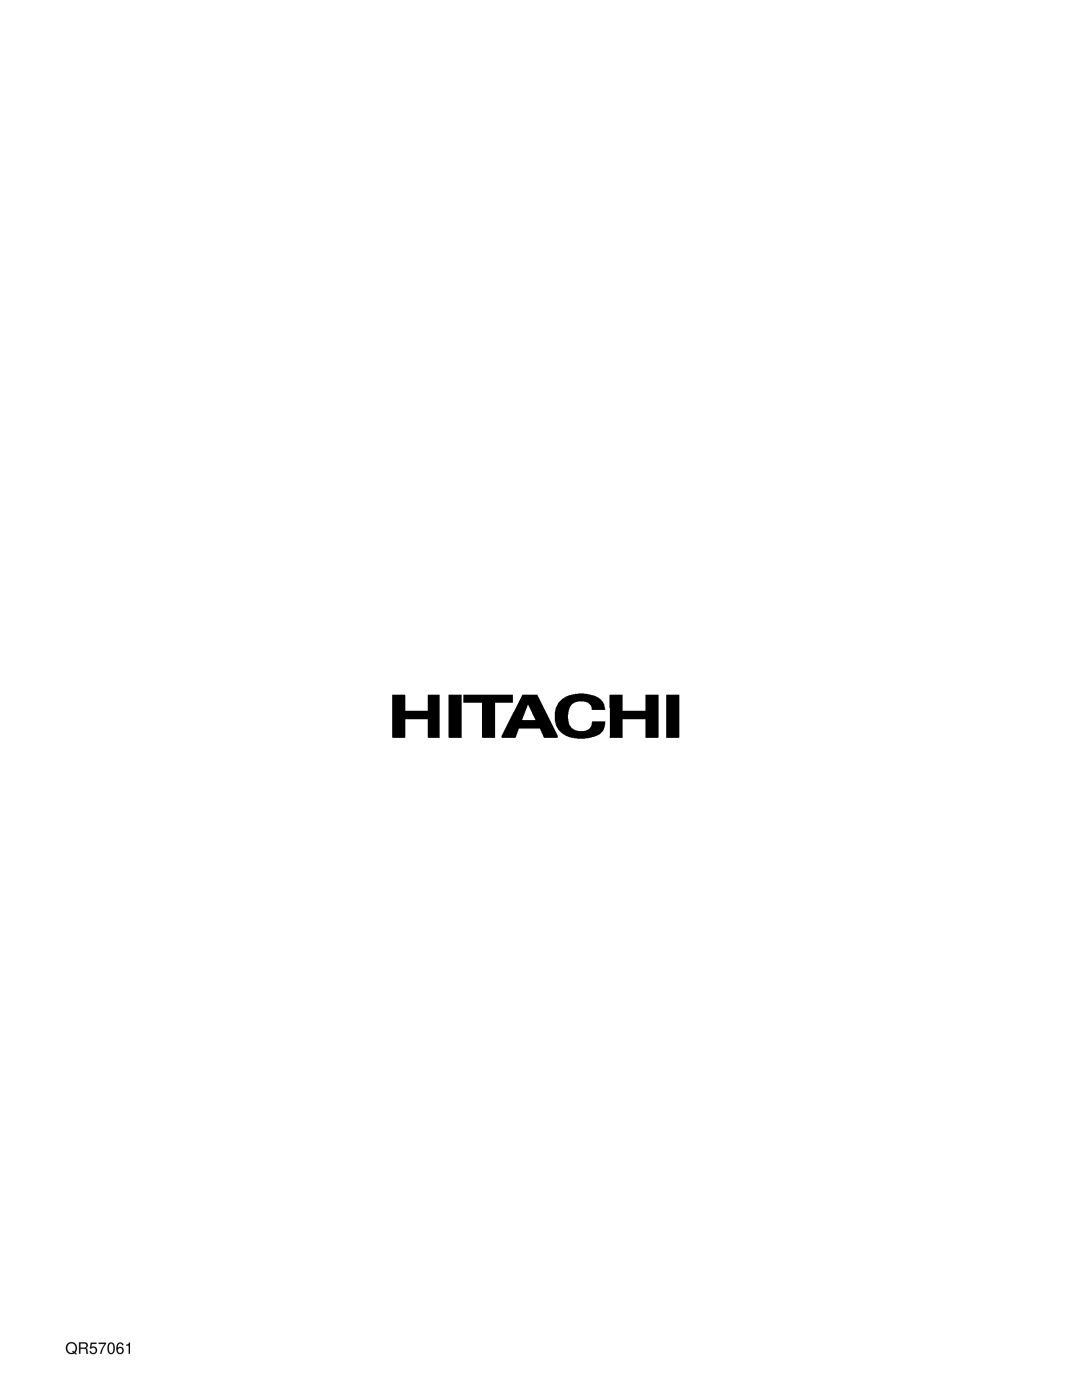 Hitachi 57T500A important safety instructions QR57061 